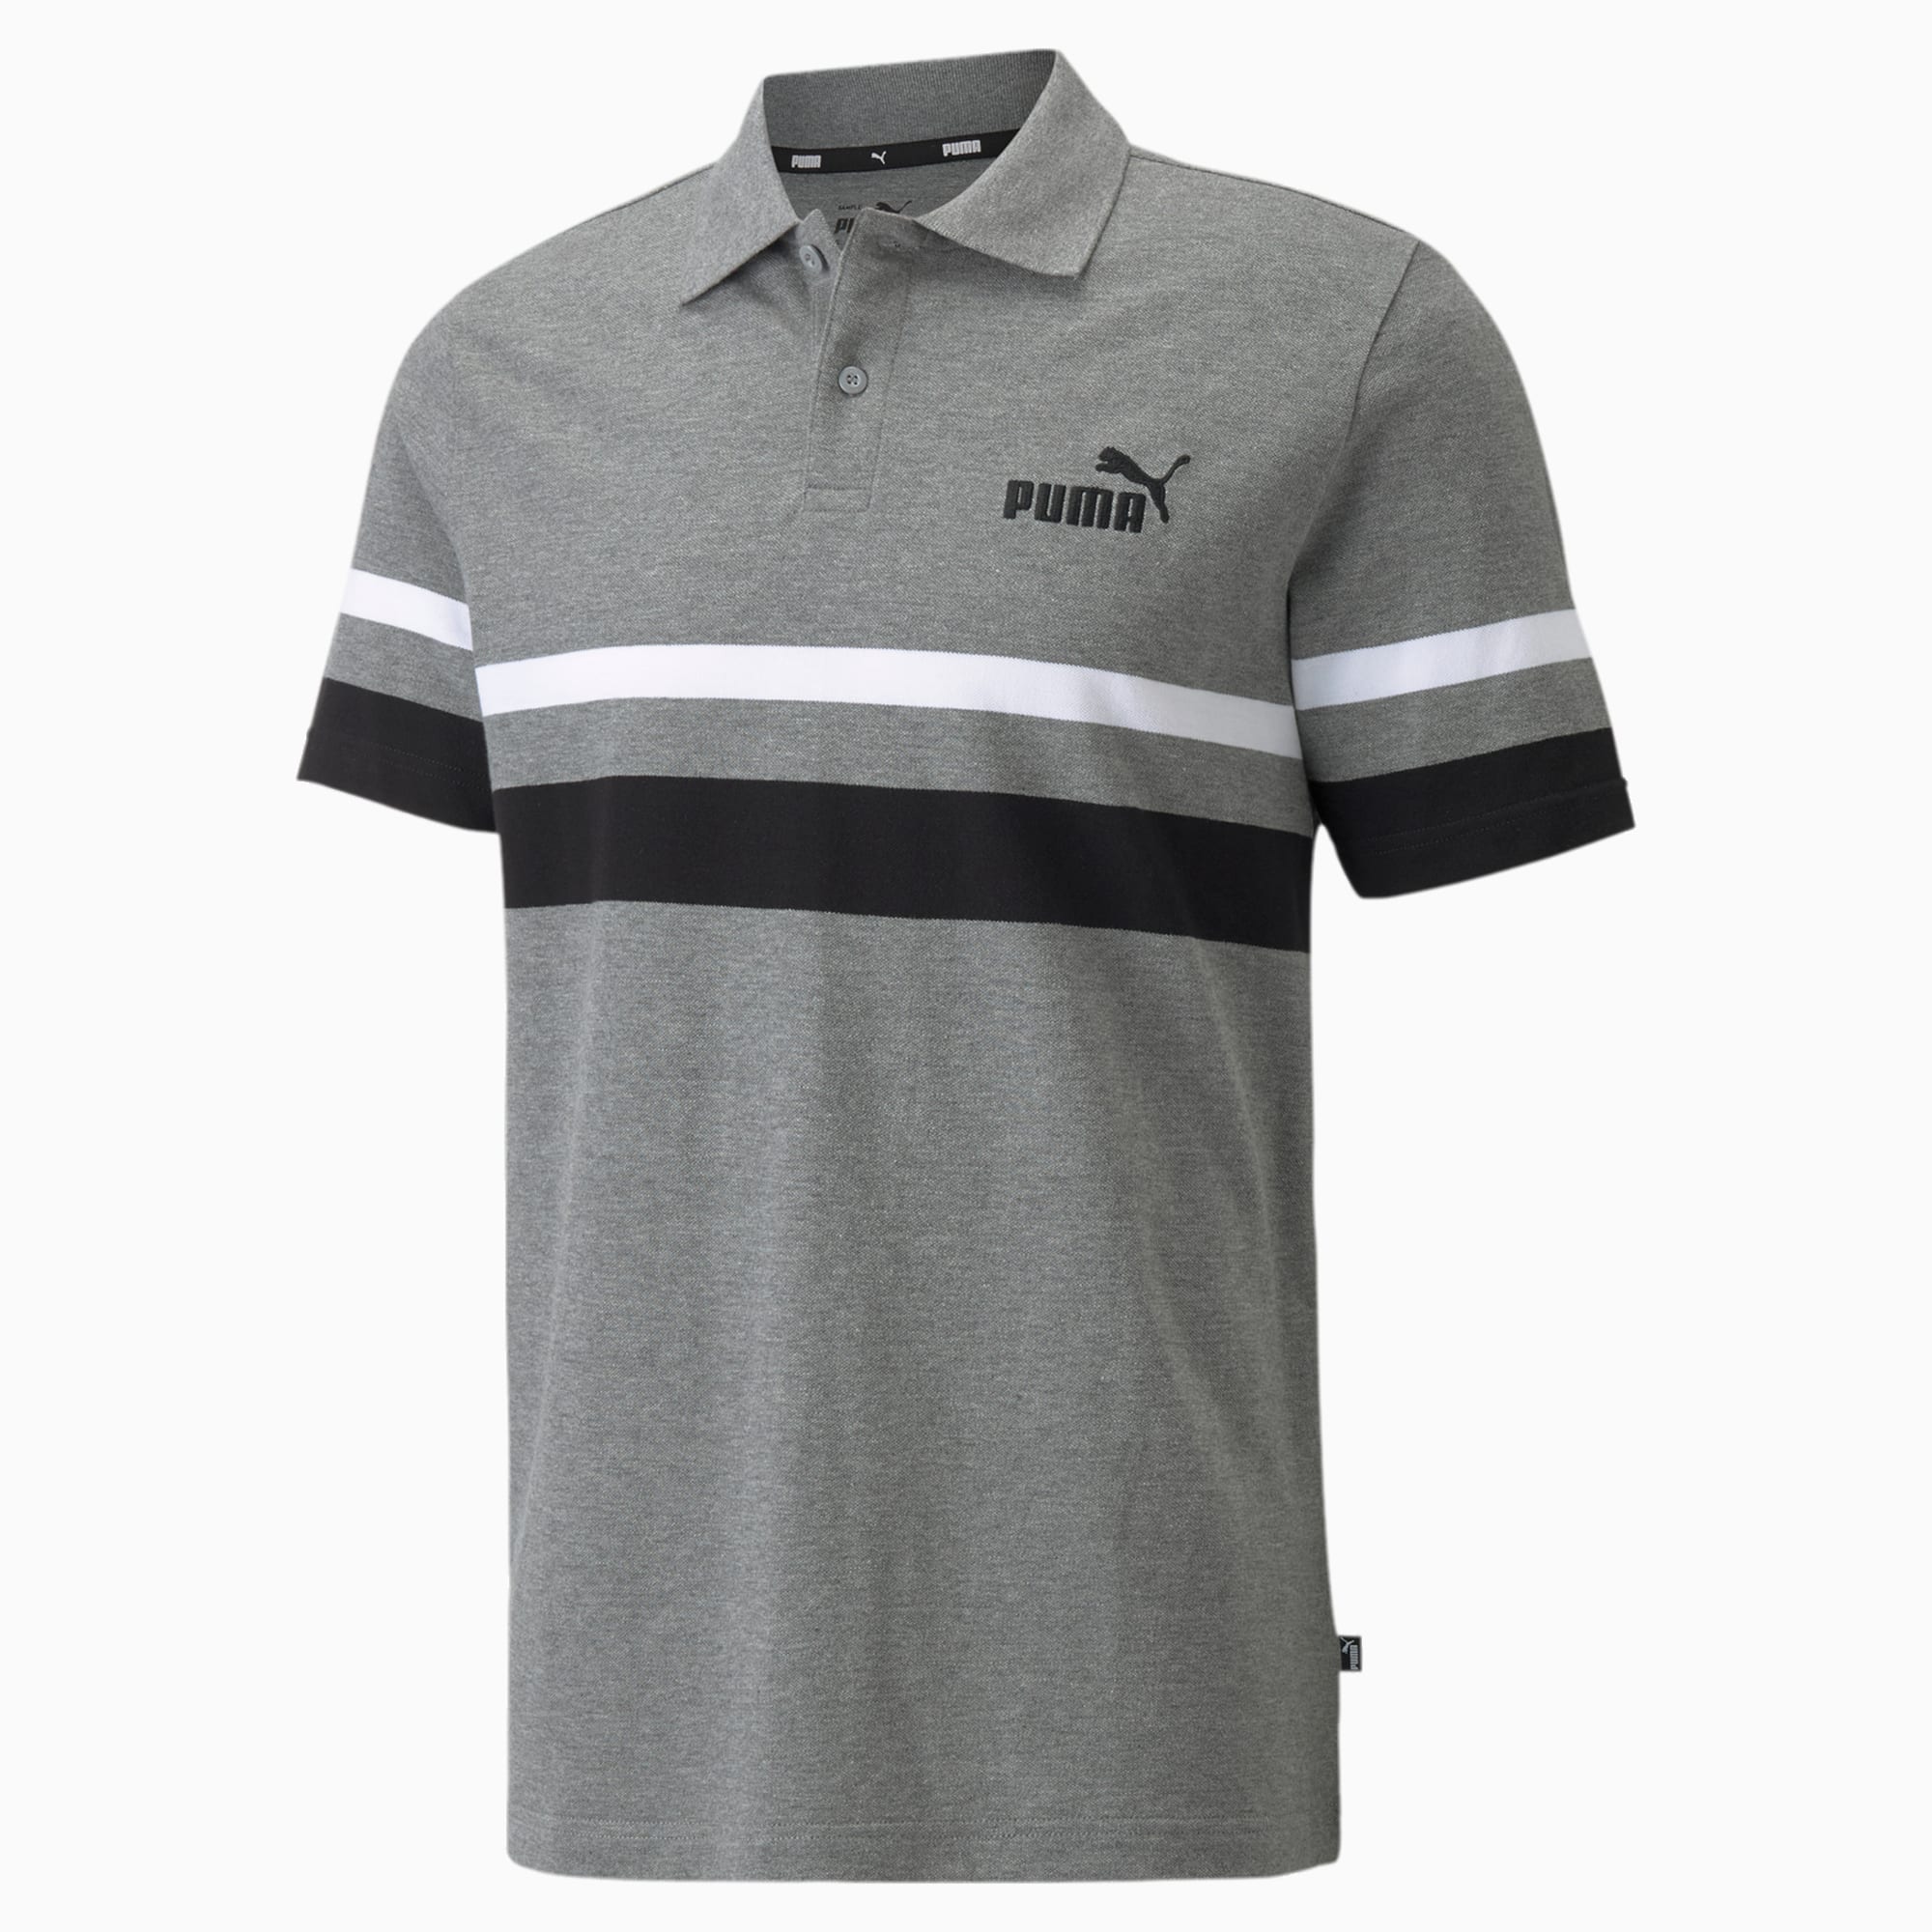 PUMA Essentials Stripe Men's Polo Shirt, Medium Grey Heather, Clothing